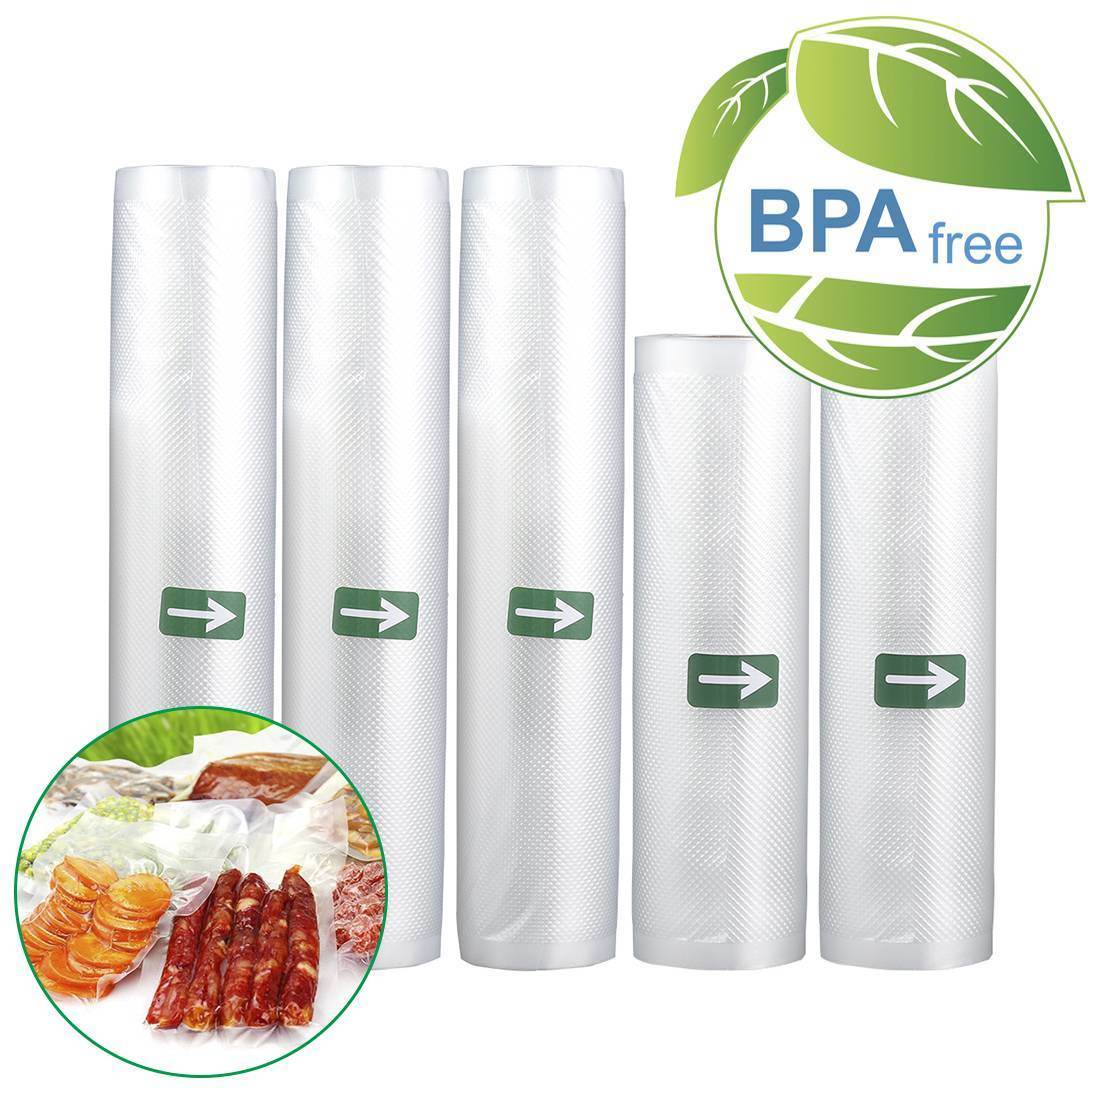 Foodsaver 8 and 11 Vacuum Seal Rolls Multipack | Make Custom-Sized BPA-Free